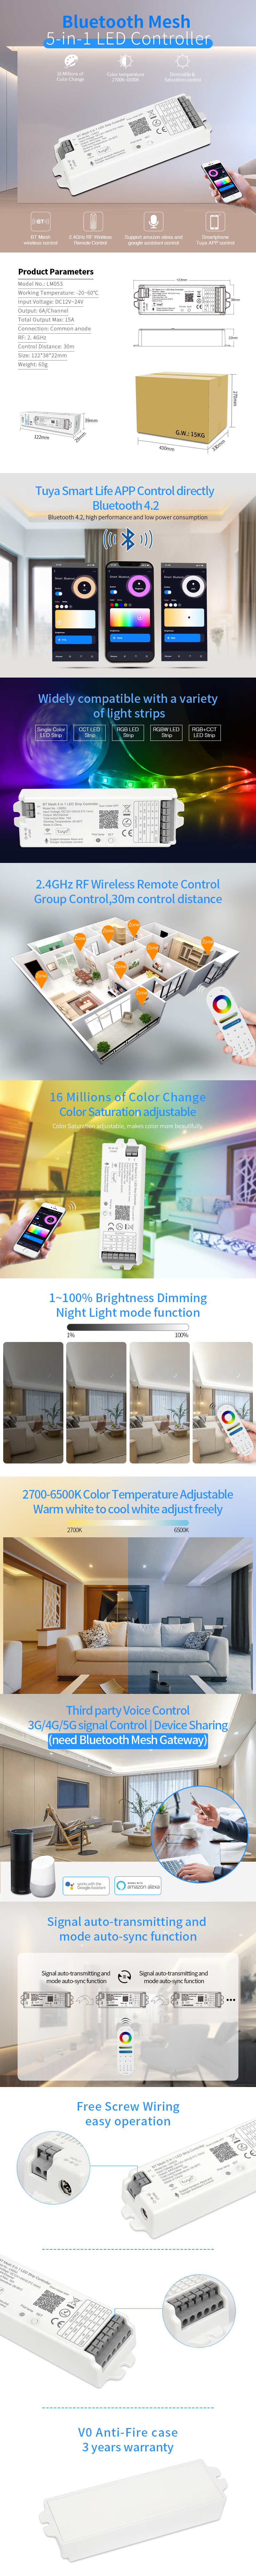 https://www.superlightingled.com/images/LED%20Lights%20Images/5-in-1-Bluetooth-Controller-for-LED-Strip-Lighting-1.jpg